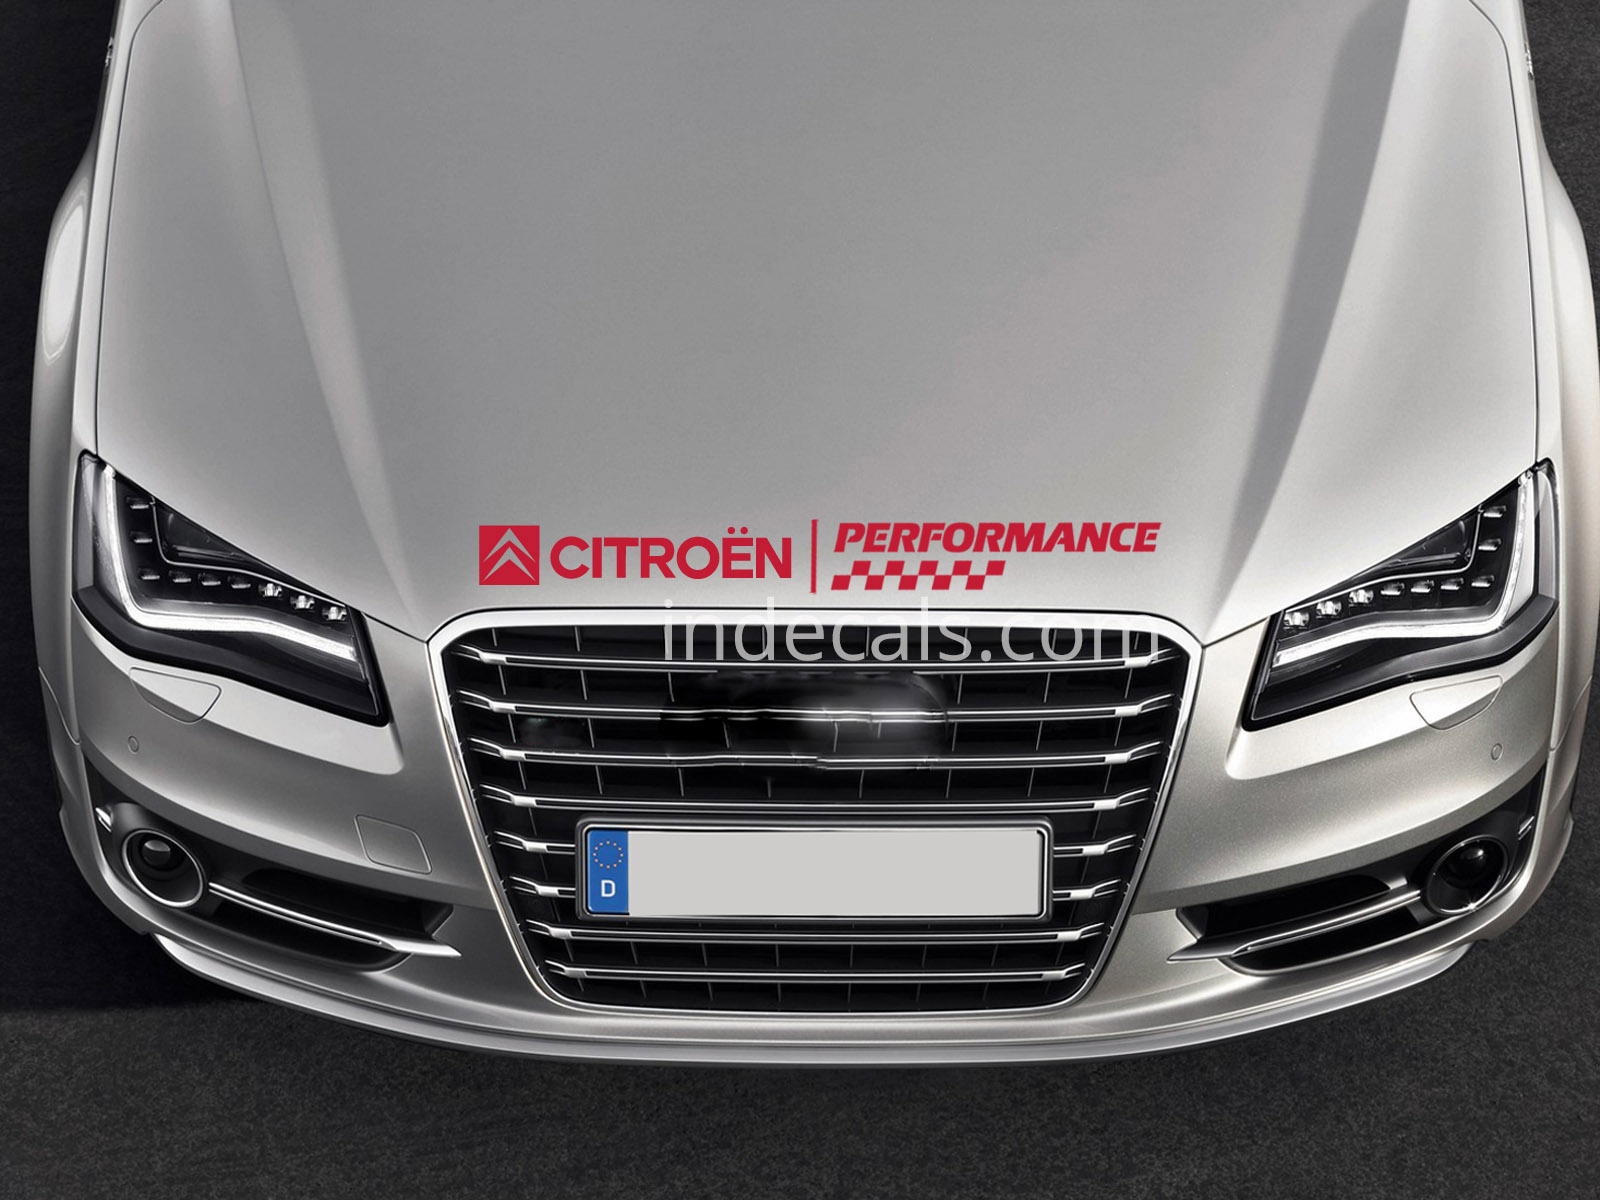 1 x Citroen Performance Sticker for Bonnet - Red